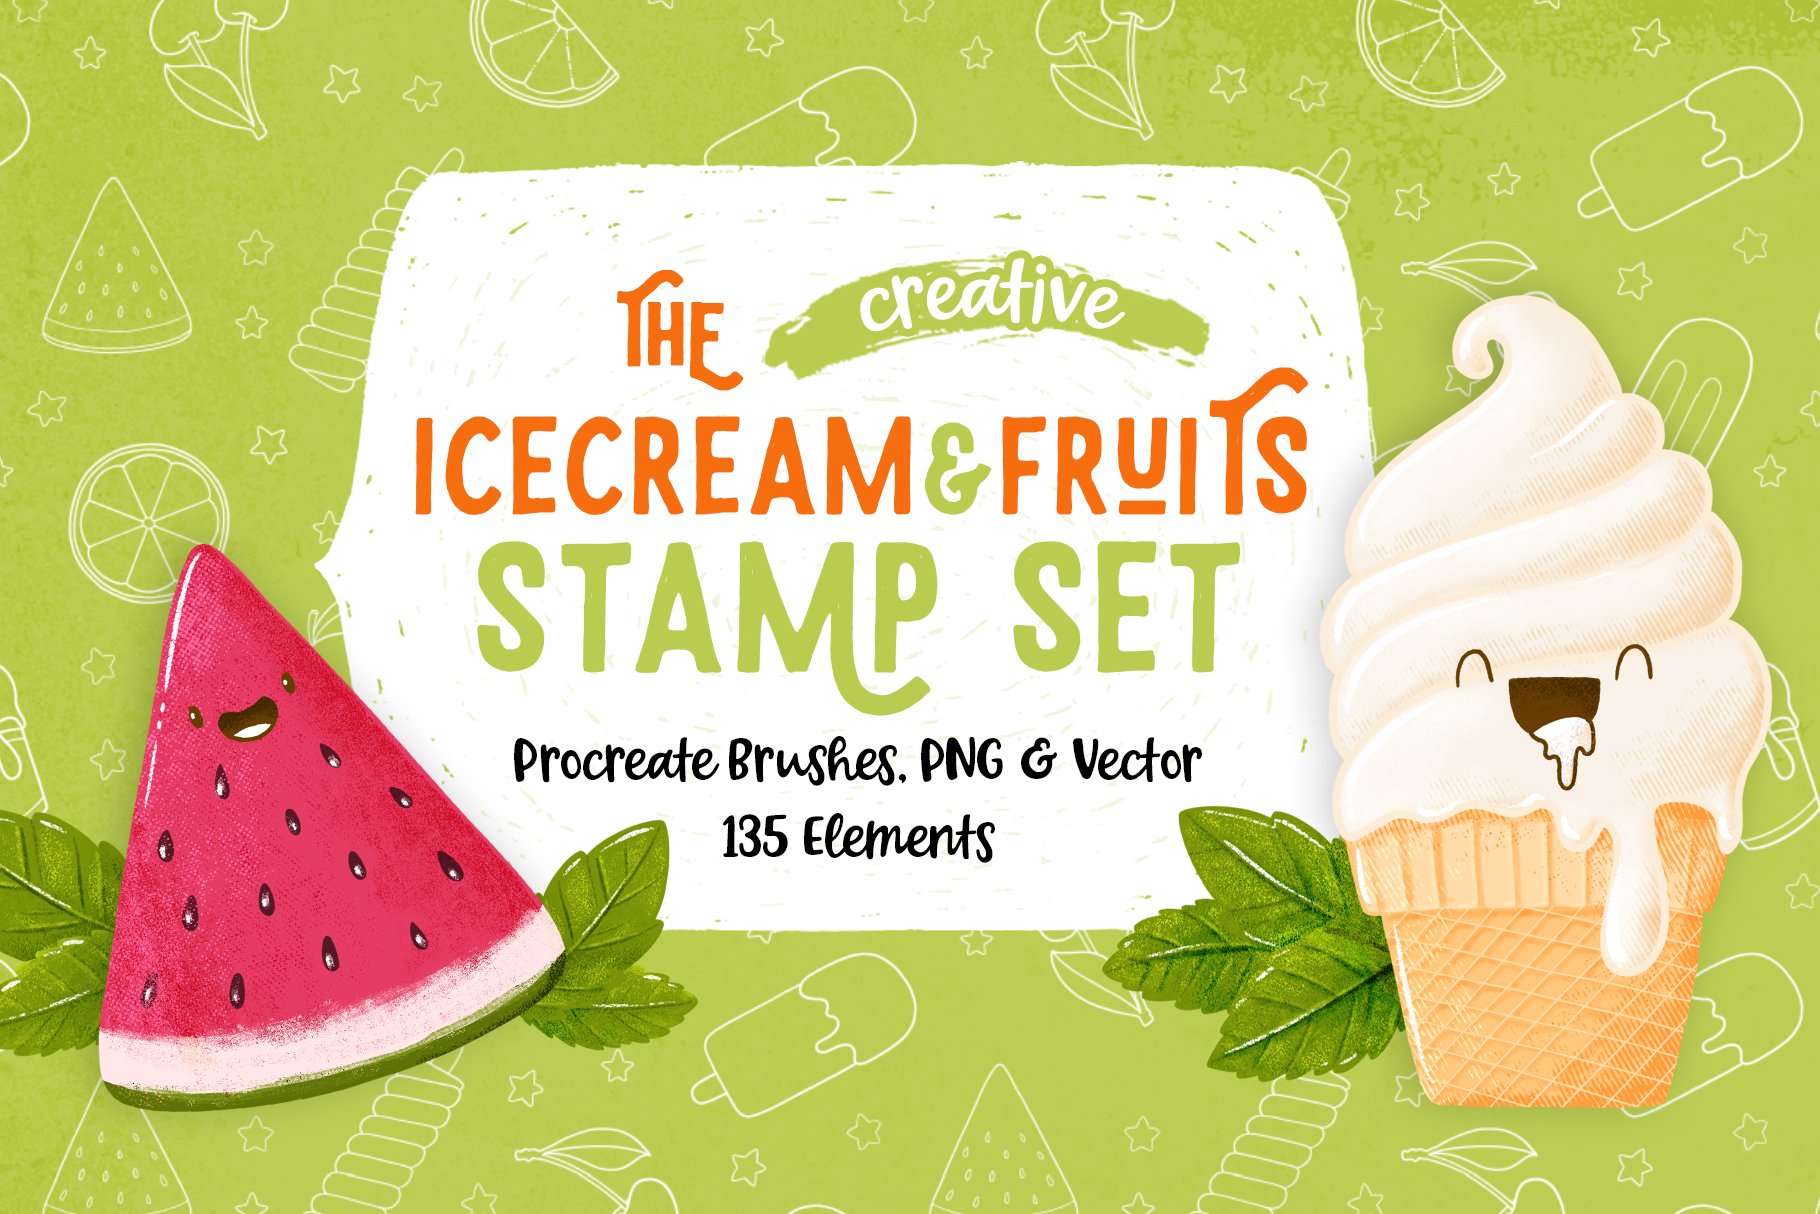 Procreate Icecream & Fruits Stampscover image.